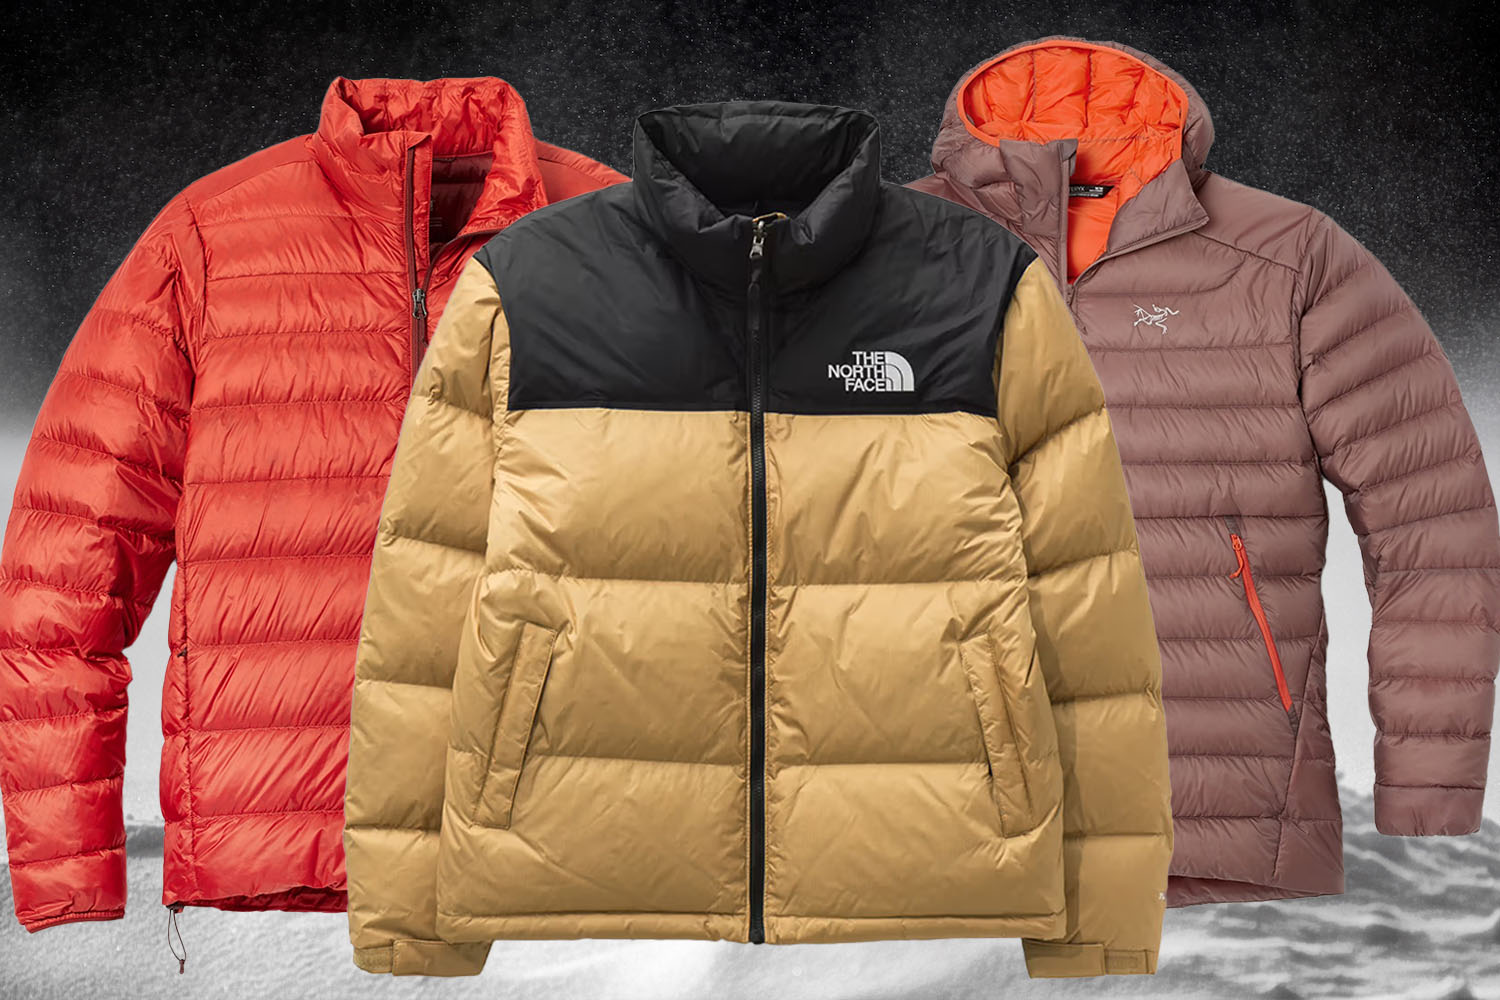 Winter Jackets for Men Men's Padded Jackets Winter Full Zipper